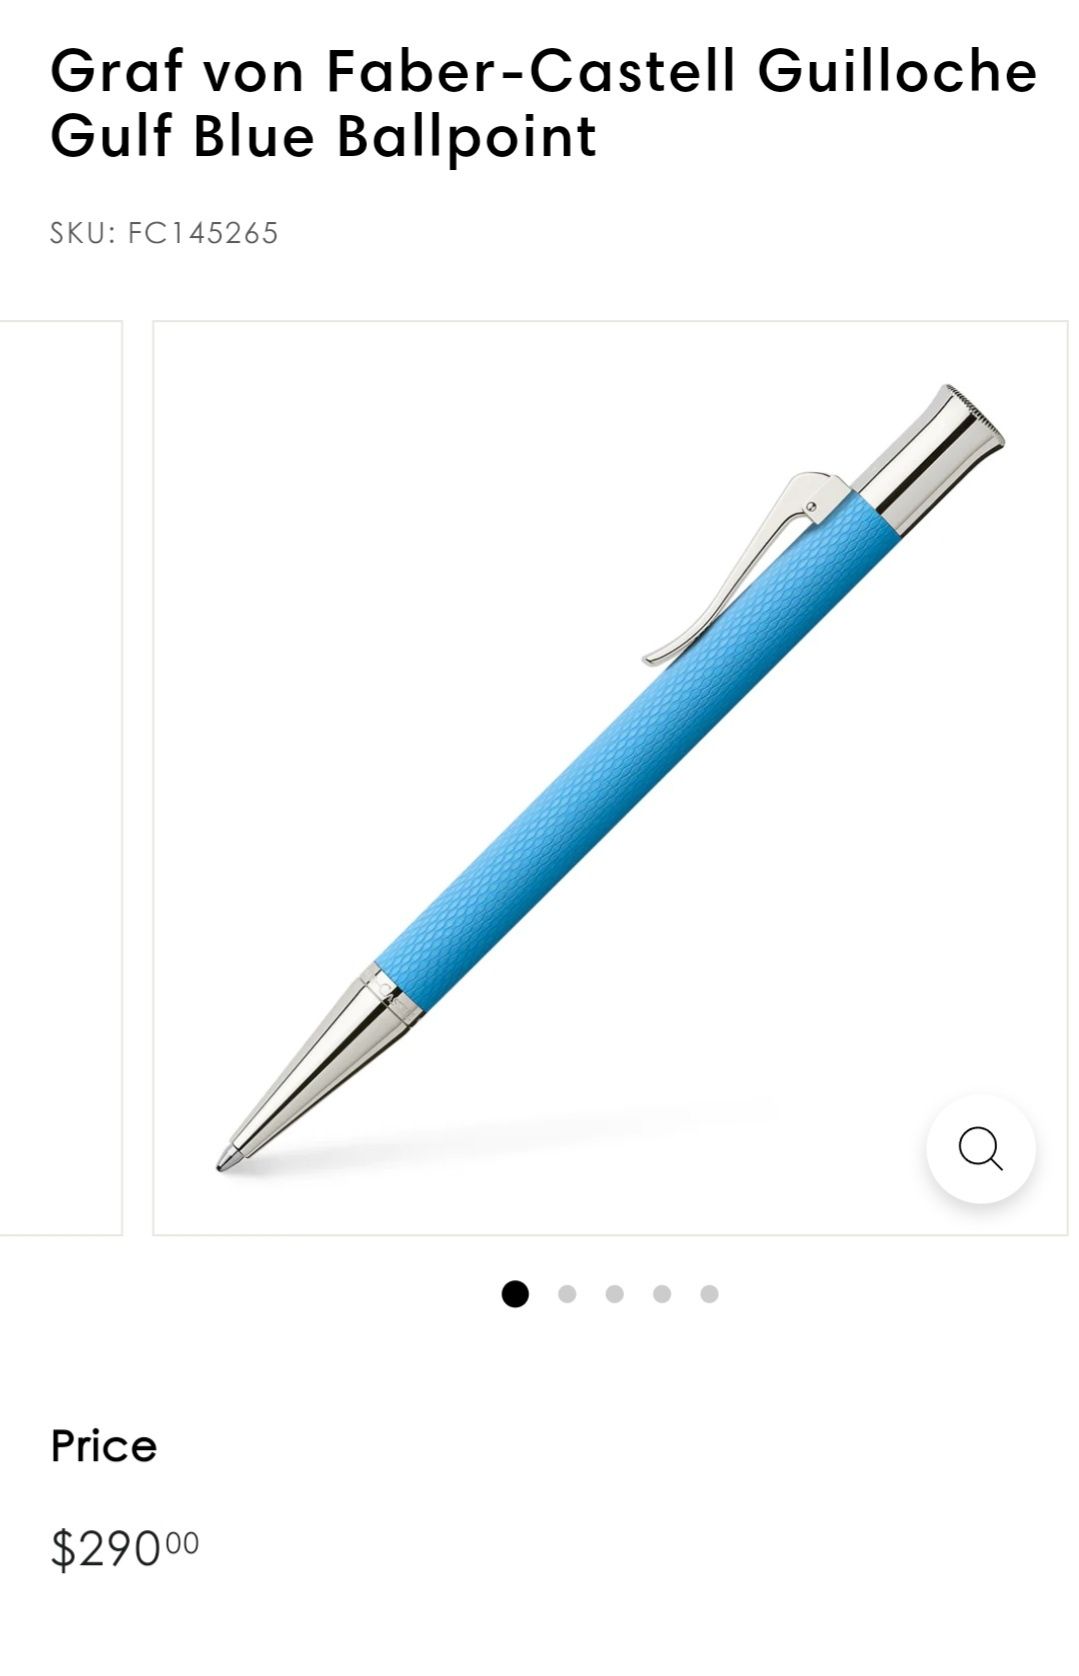 Pix Graf von Faber-Castell Propelling ball pen guilloche gulf blue